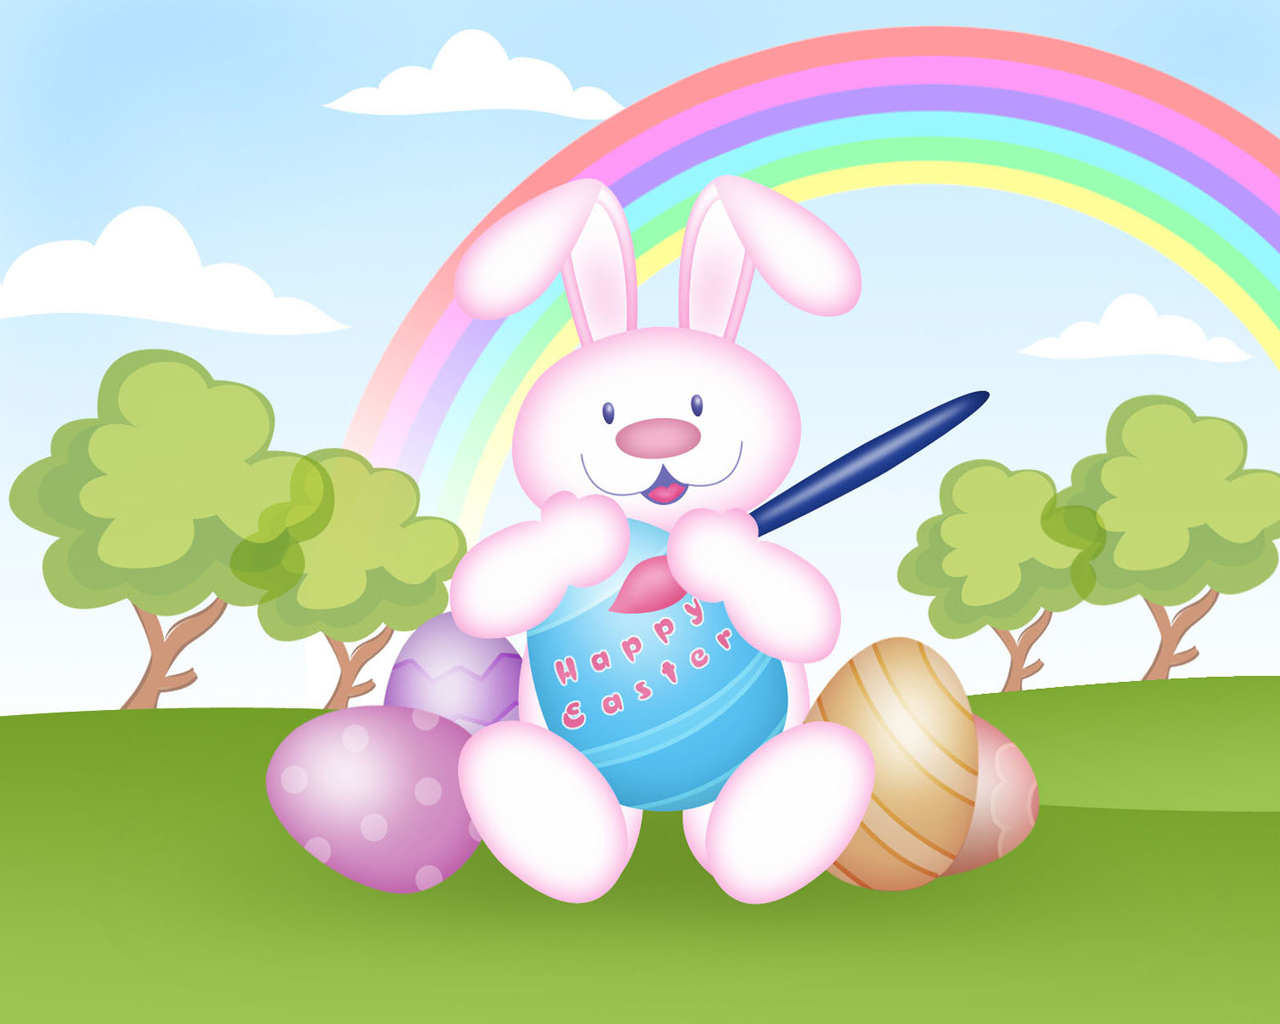 Funny Wallpaper Desktop Easter Bunny Clip Art Pictures